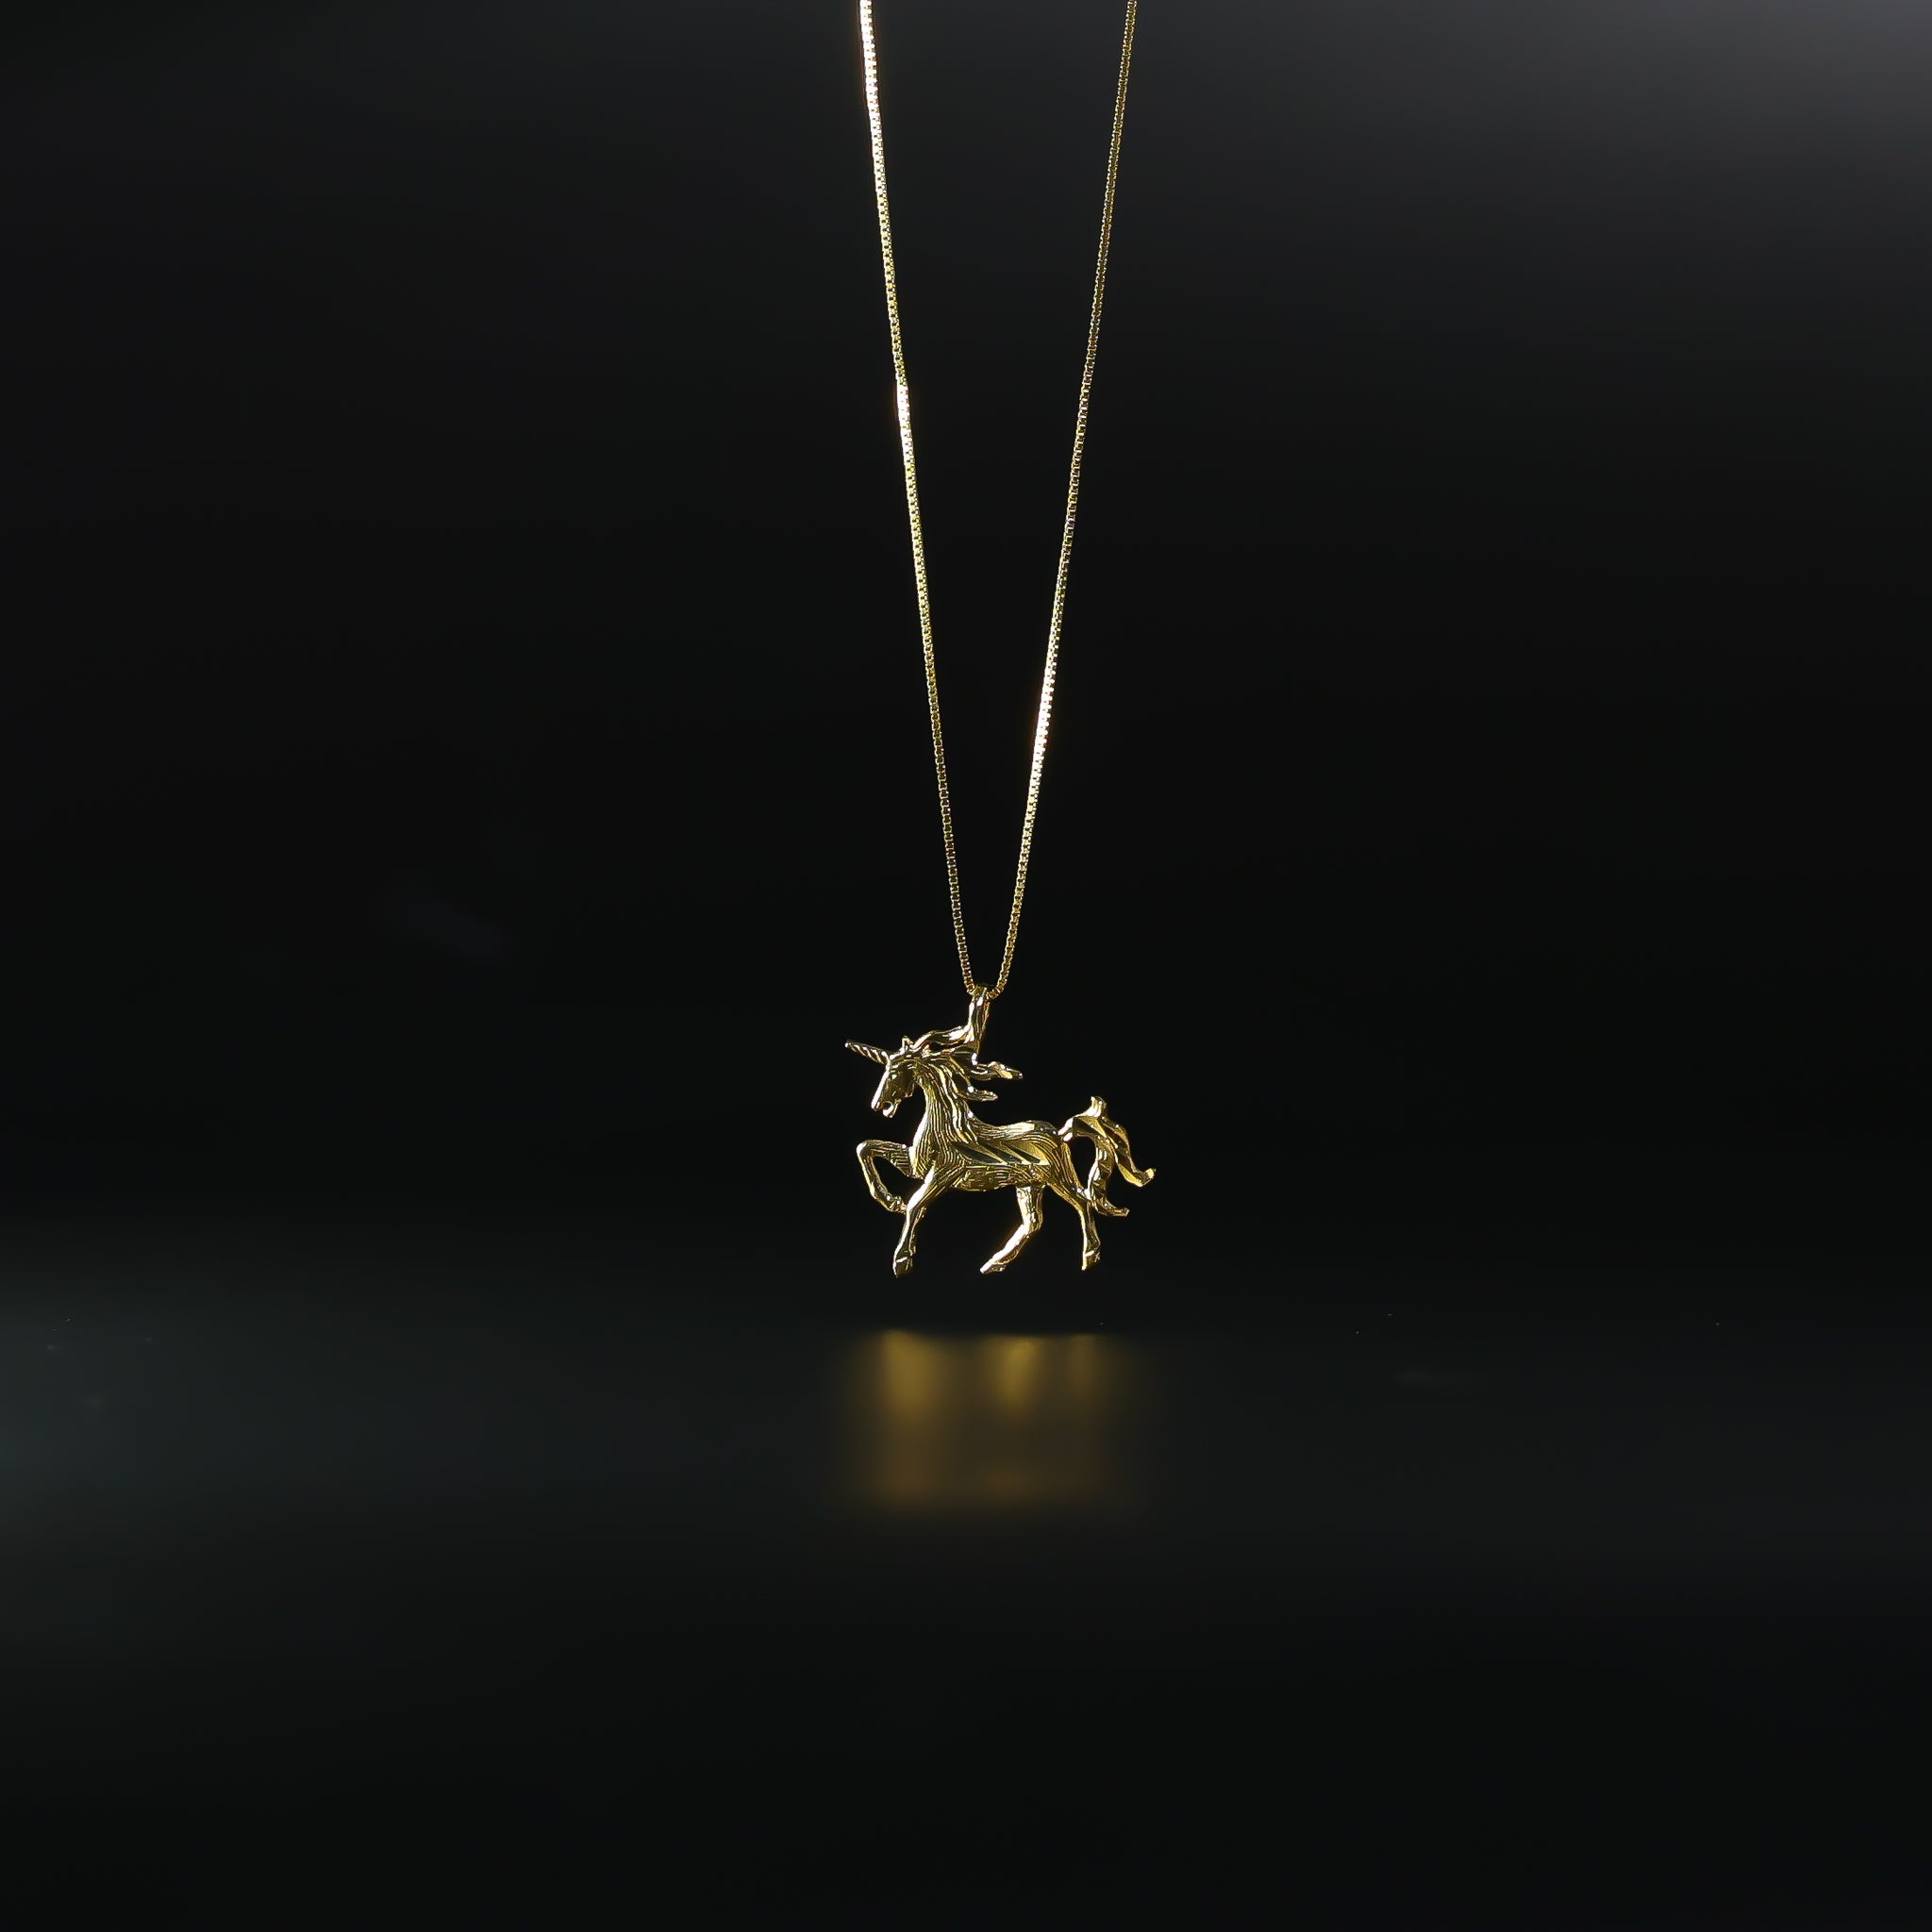 Gold Dainty Unicorn Pendant Model-1650 - Charlie & Co. Jewelry